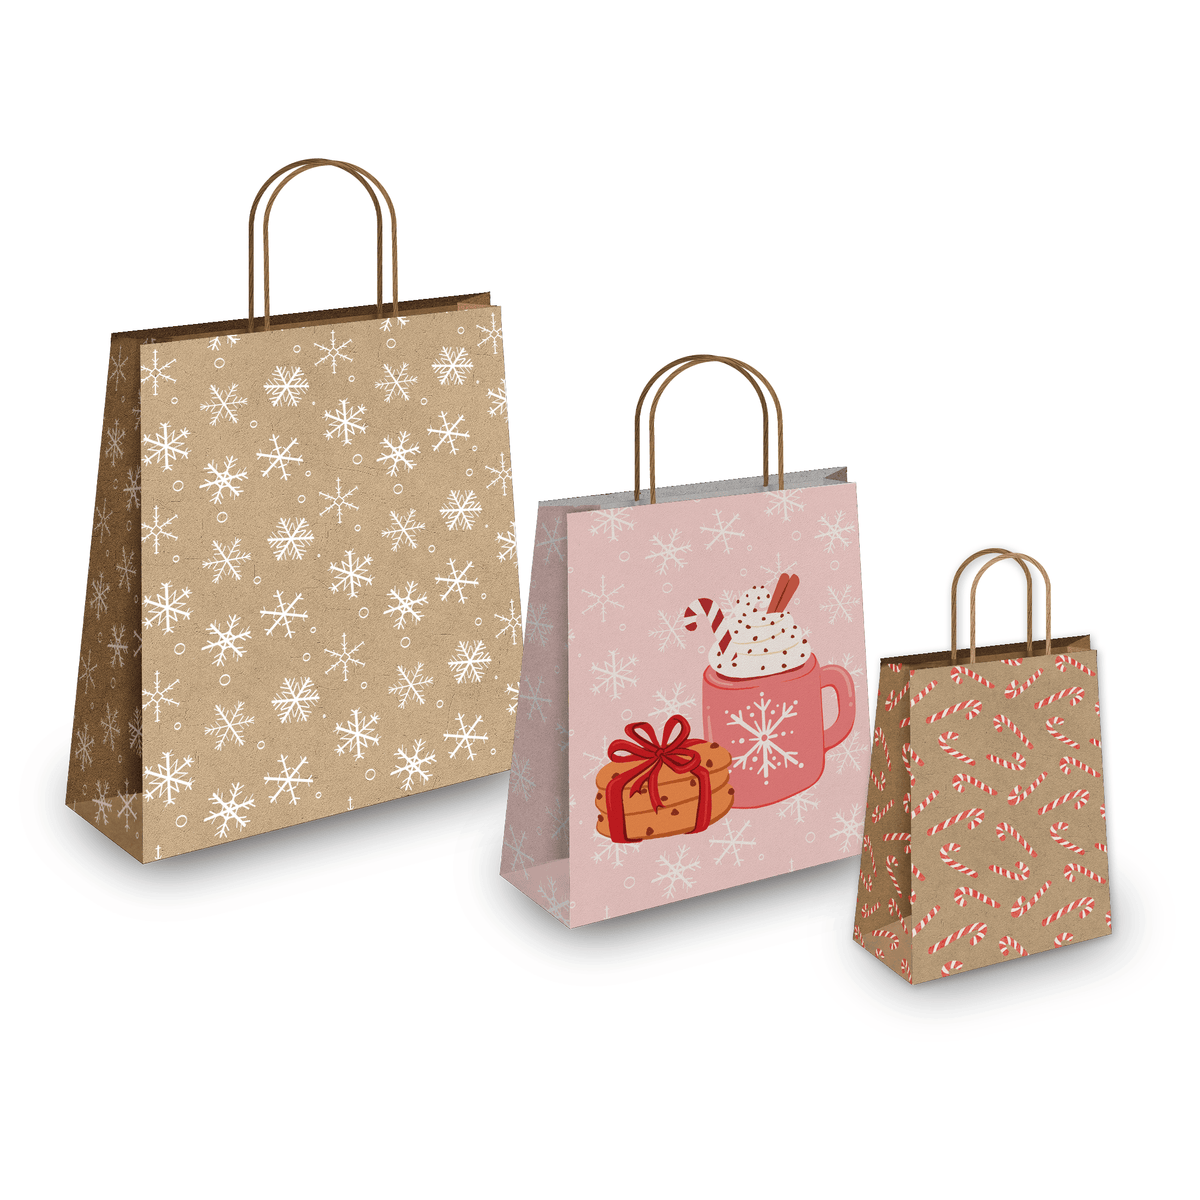 Snowflake Winter Christmas Printed Kraft Bags with Handles Pro Supply Global